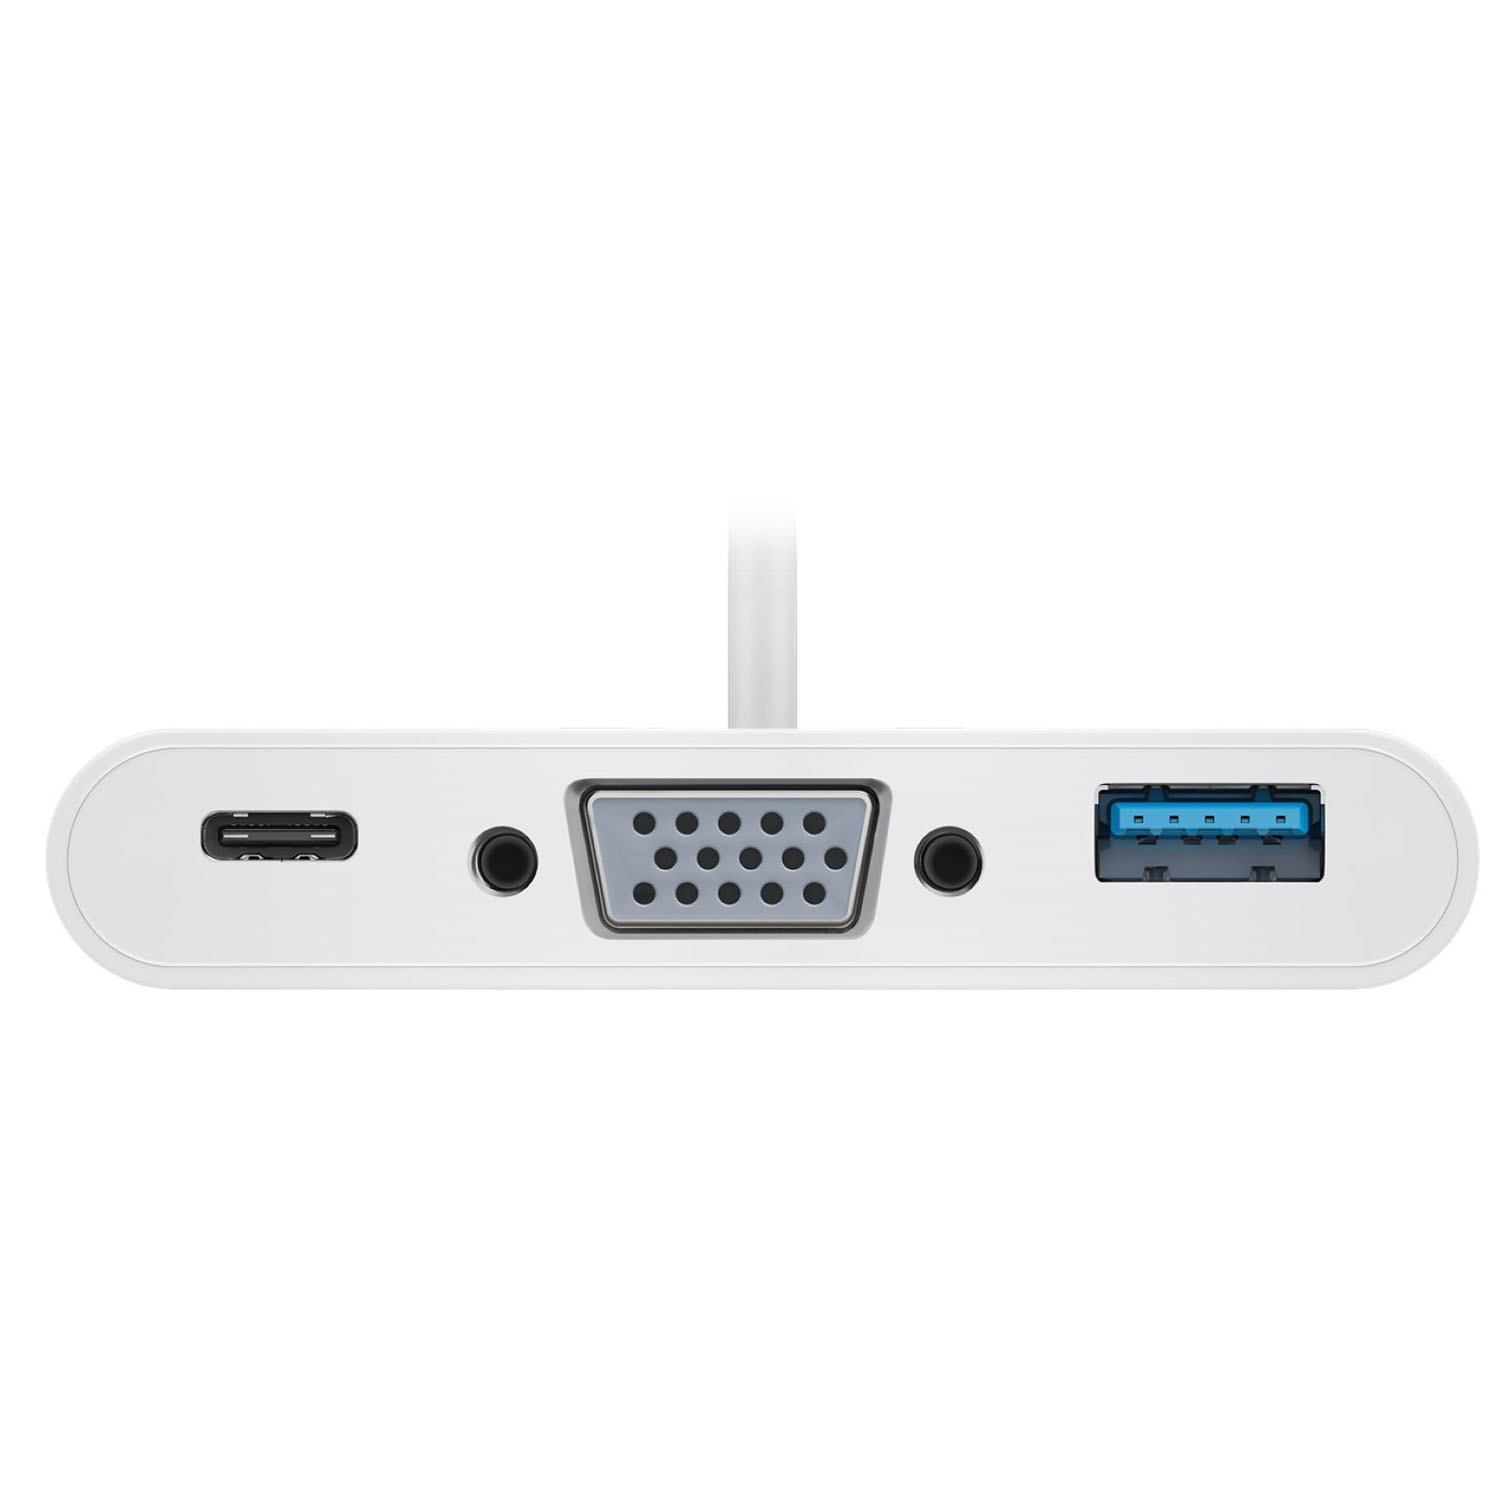 GOOBAY 62100 Multiport-Adapter Hub, PD, USB-C USB 3.0+VGA+C Weiß